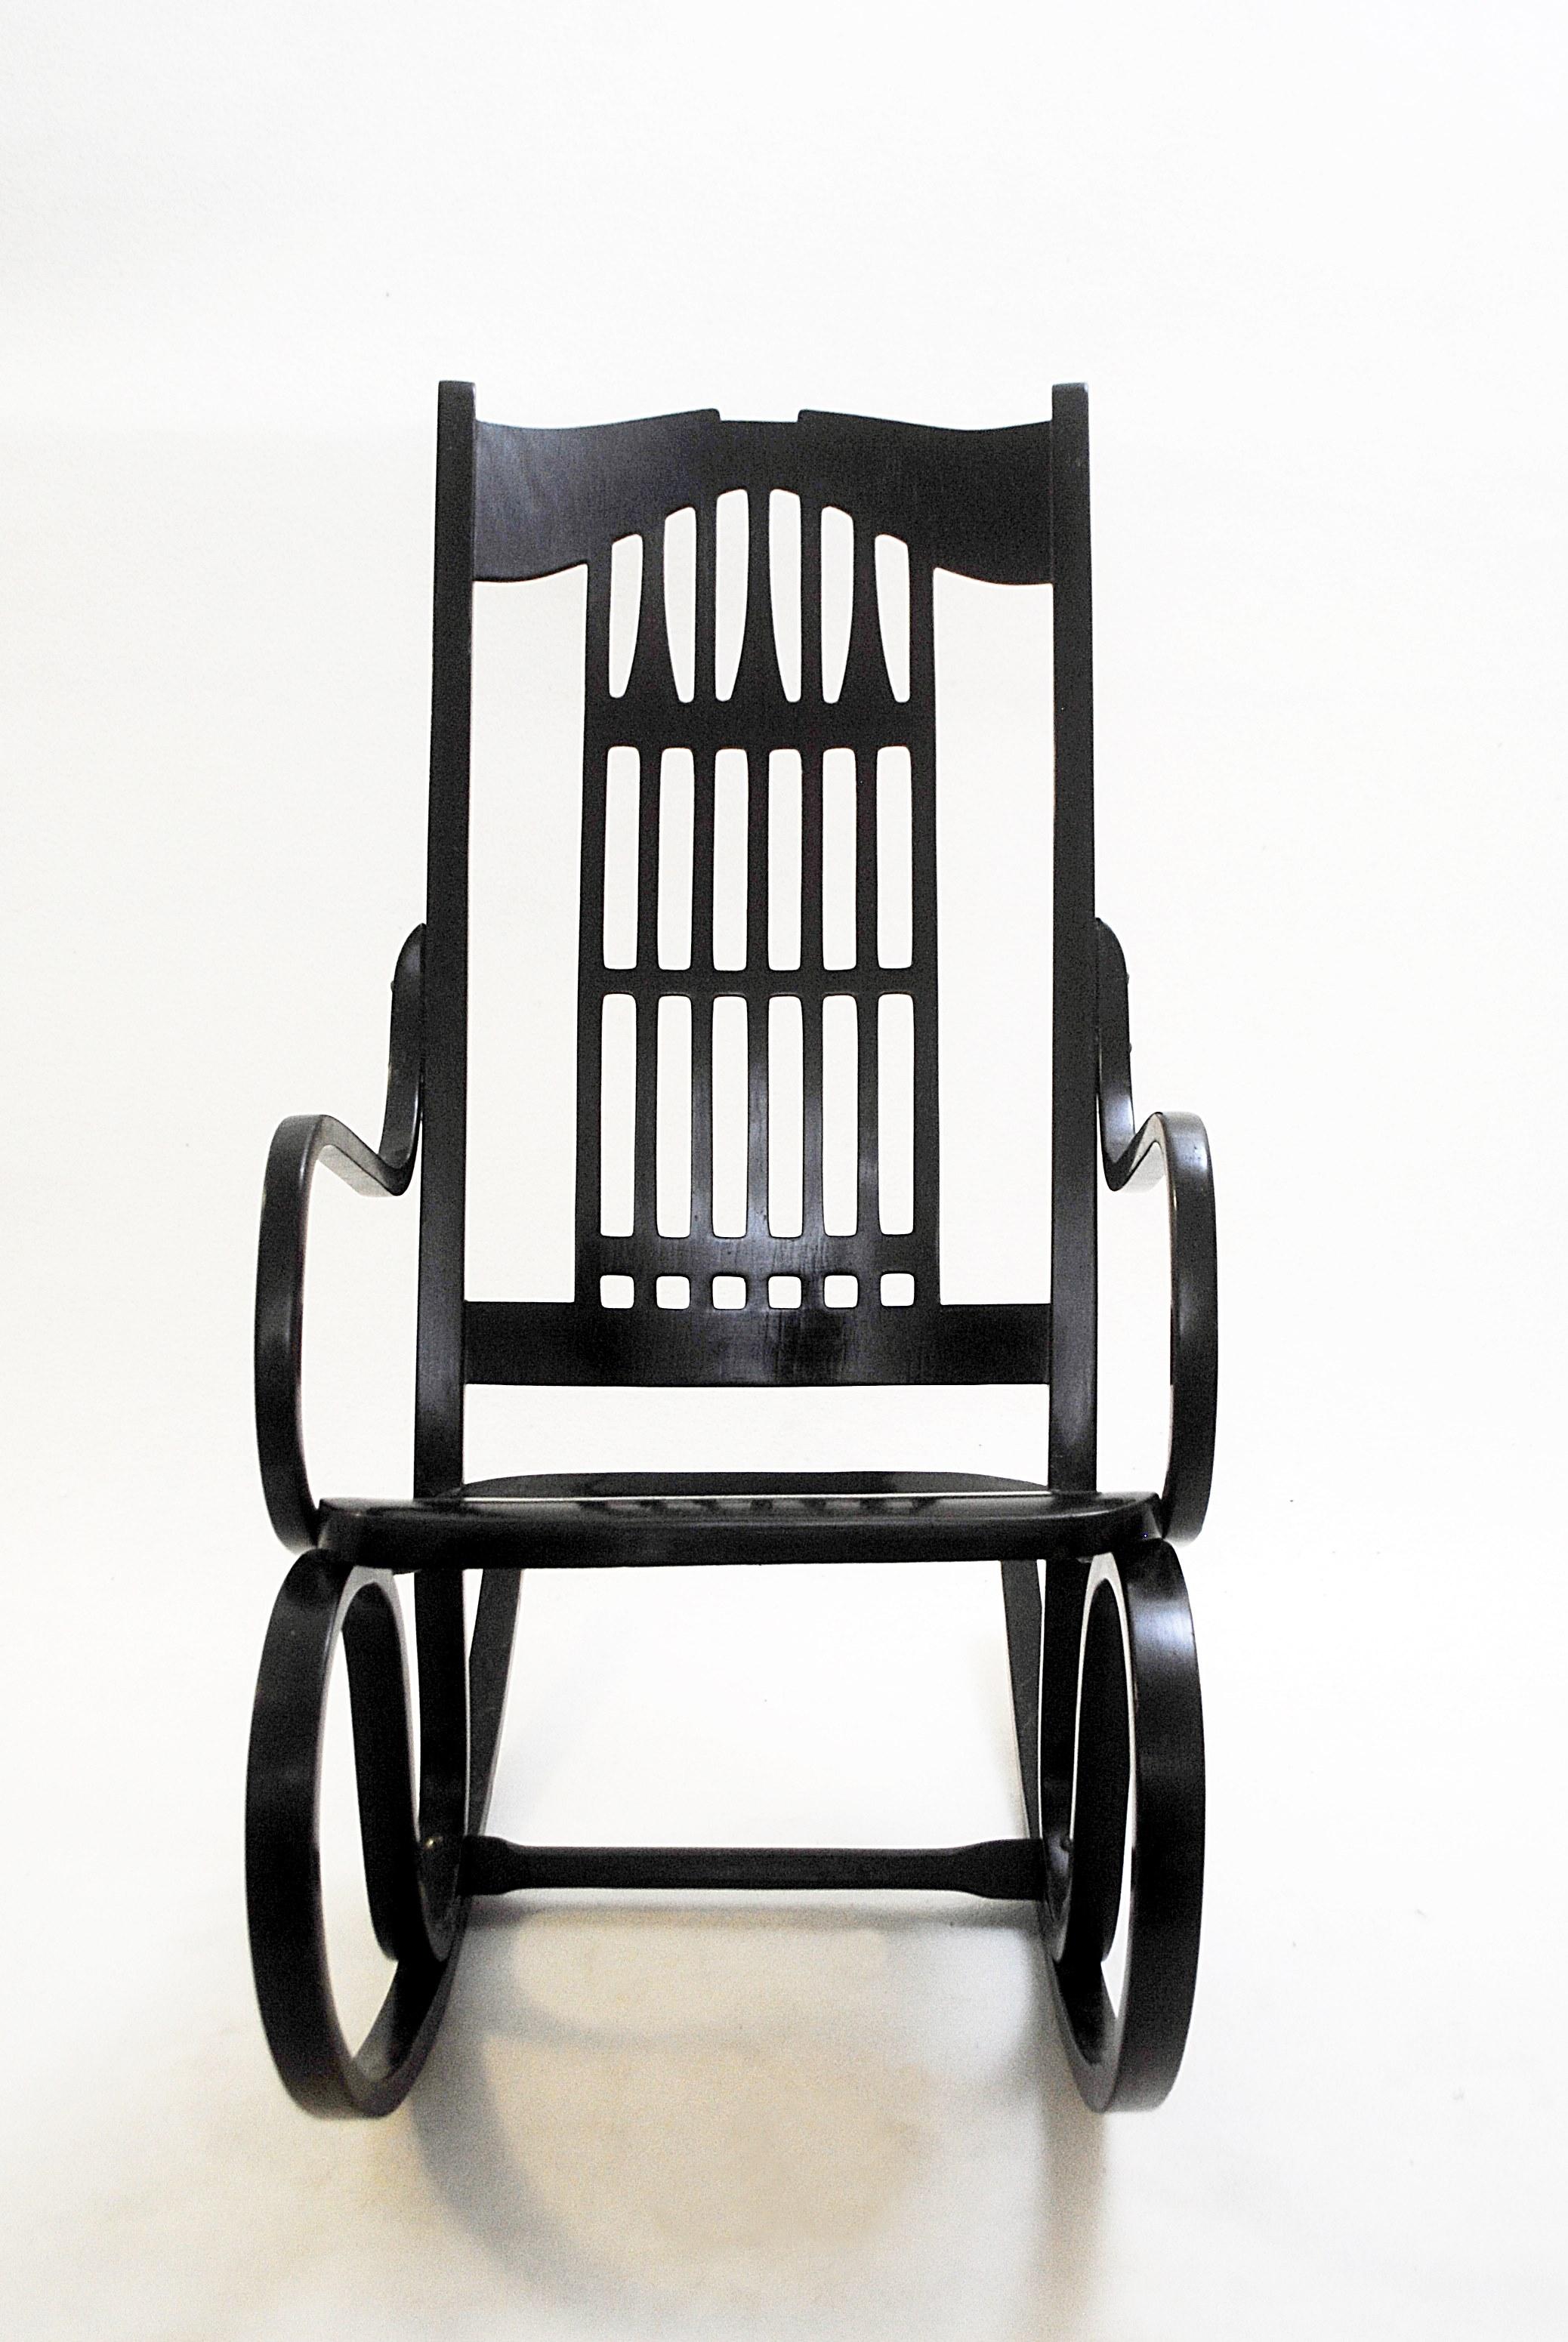 Rocking chair model number 824 by Gustav Siegel, Austria, 1905.